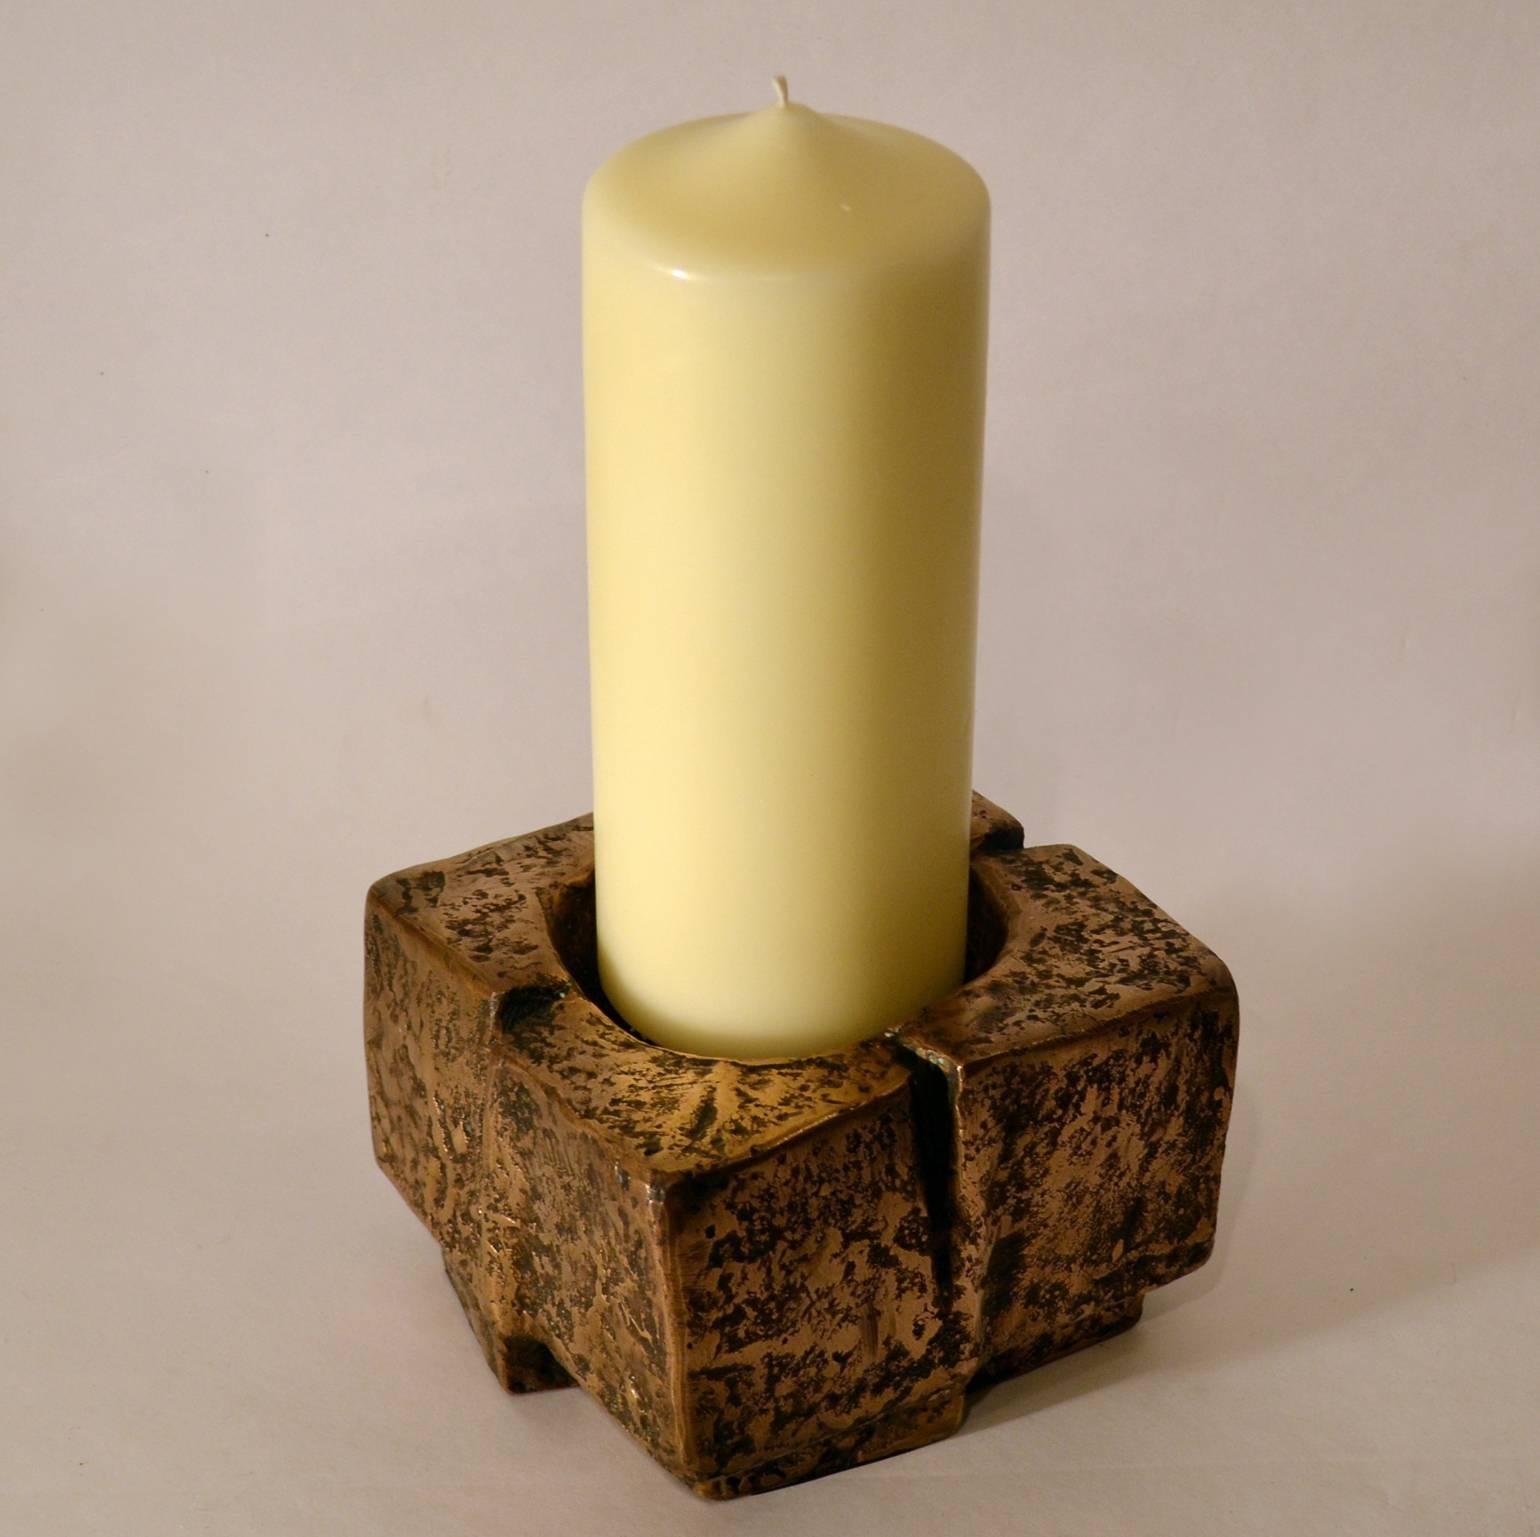 Brutalist square shape bronze cast candlesticks for 7/8 cm diameter candles.